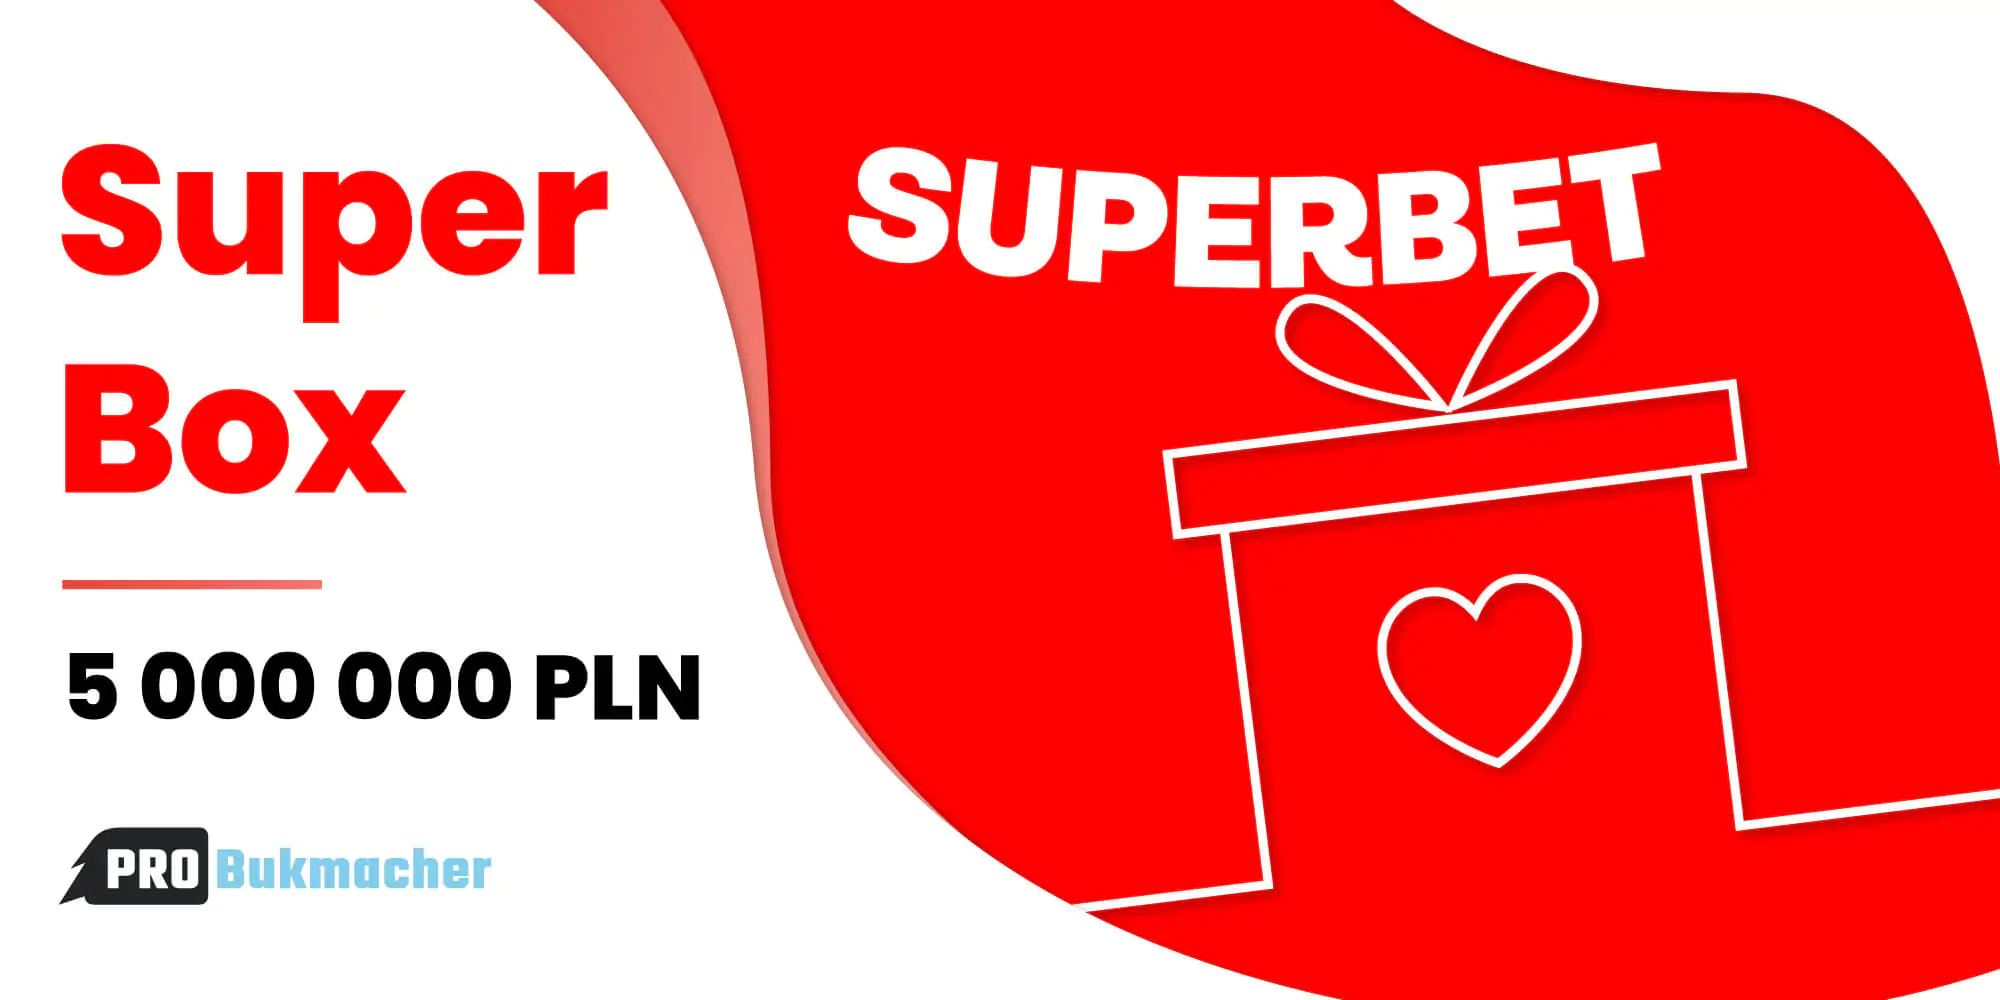 Superbet – Super Box (5 000 000 PLN w puli nagród)